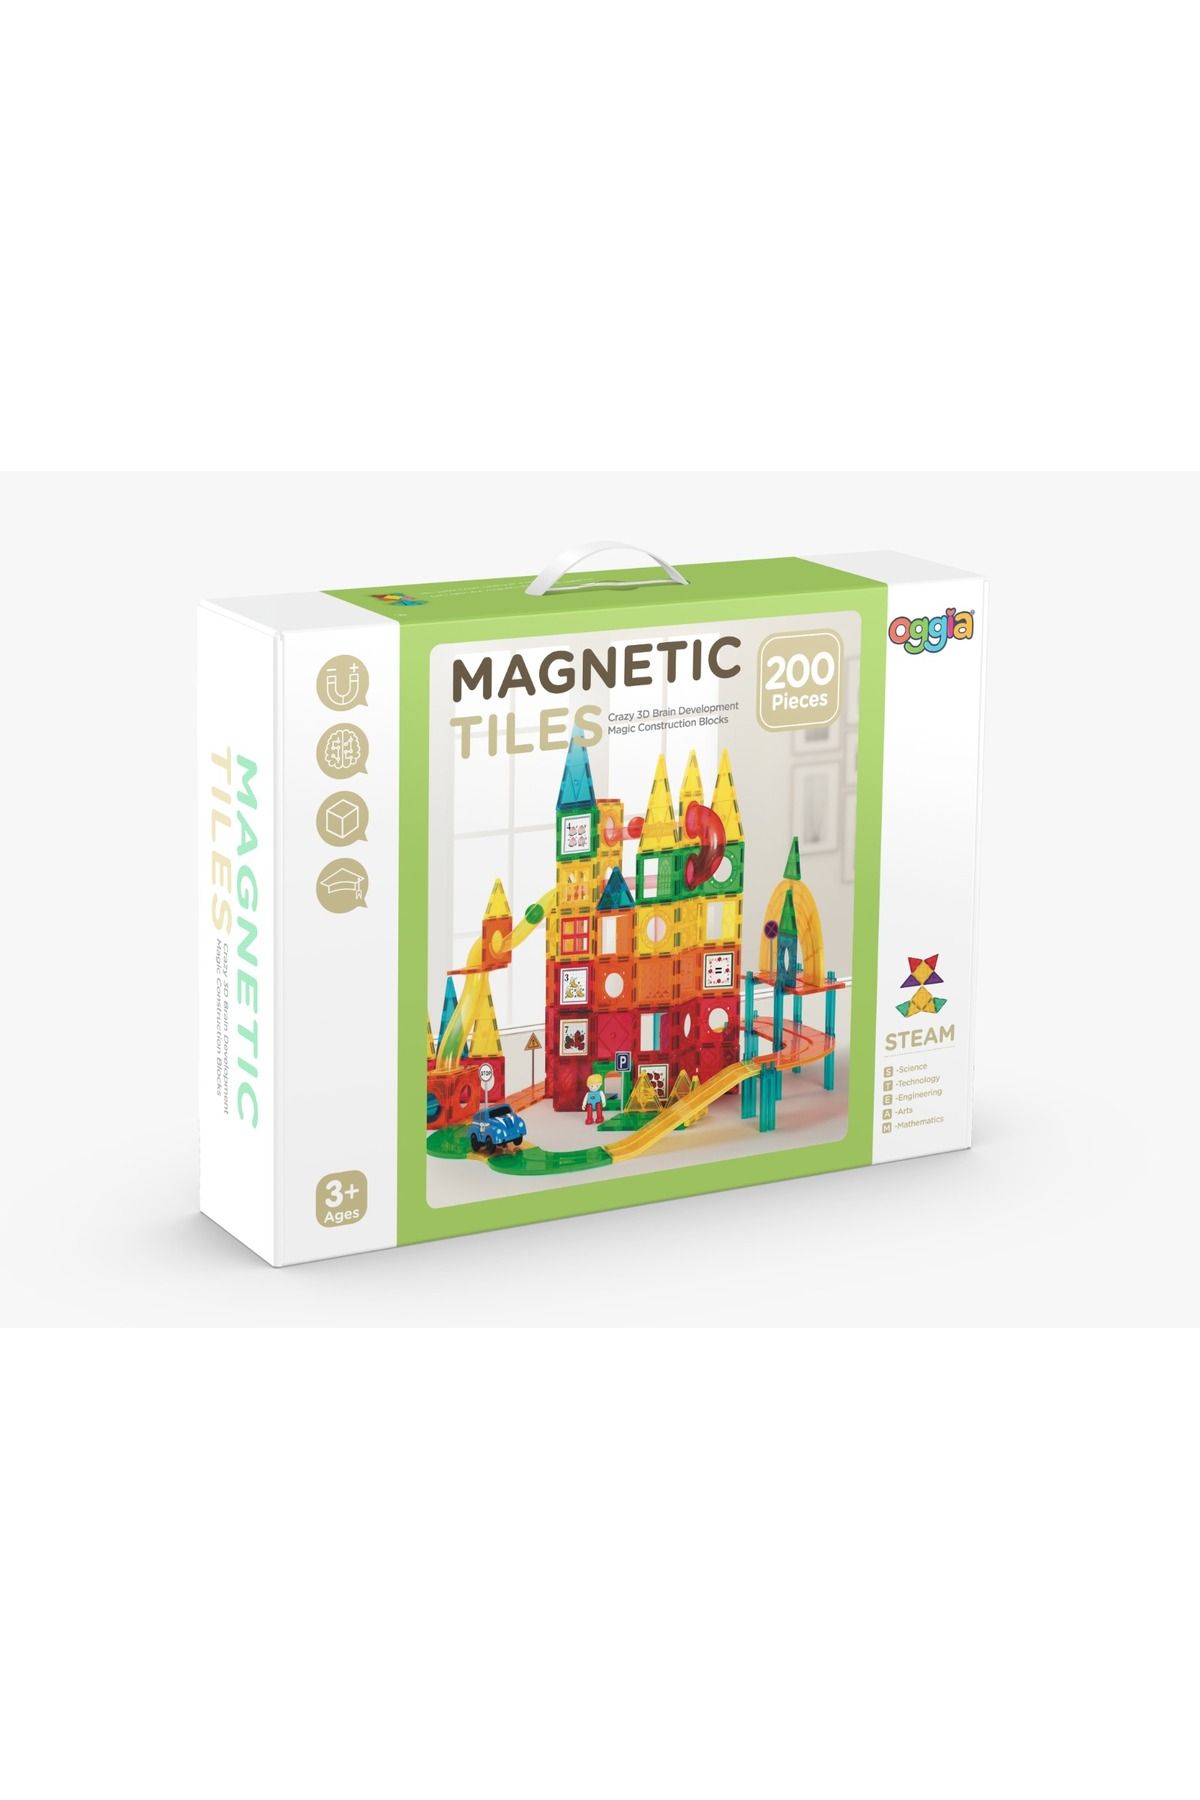 OGGİA Magnetic Tiles 200 Parça Premium Manyetik Oyun Seti KBM-200